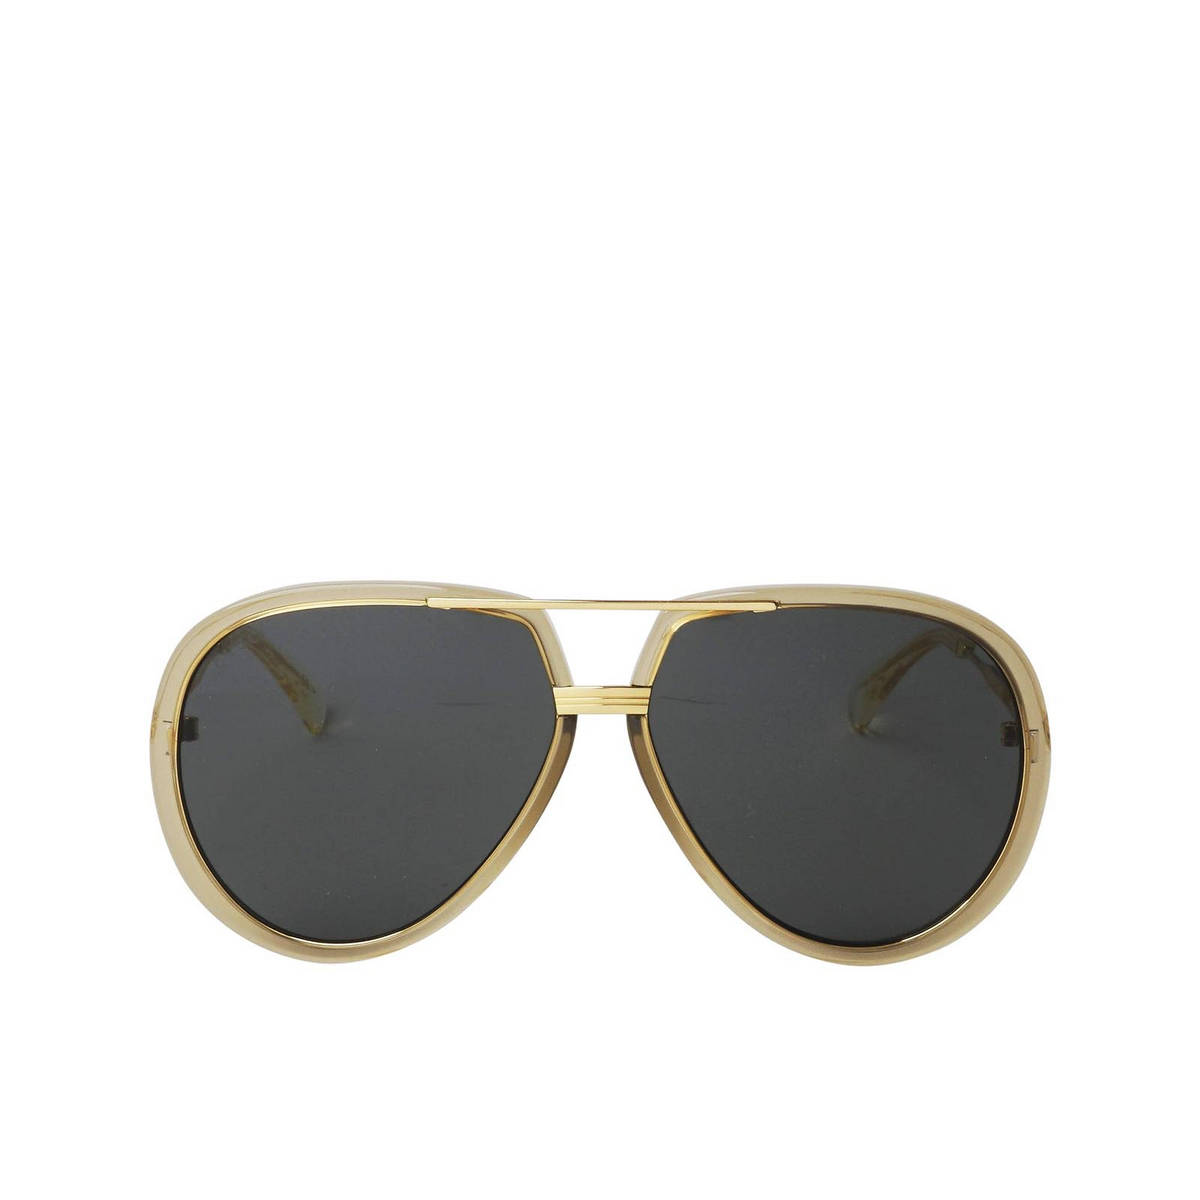 Gucci® Aviator Sunglasses: GG0904S color Green 002 - front view.